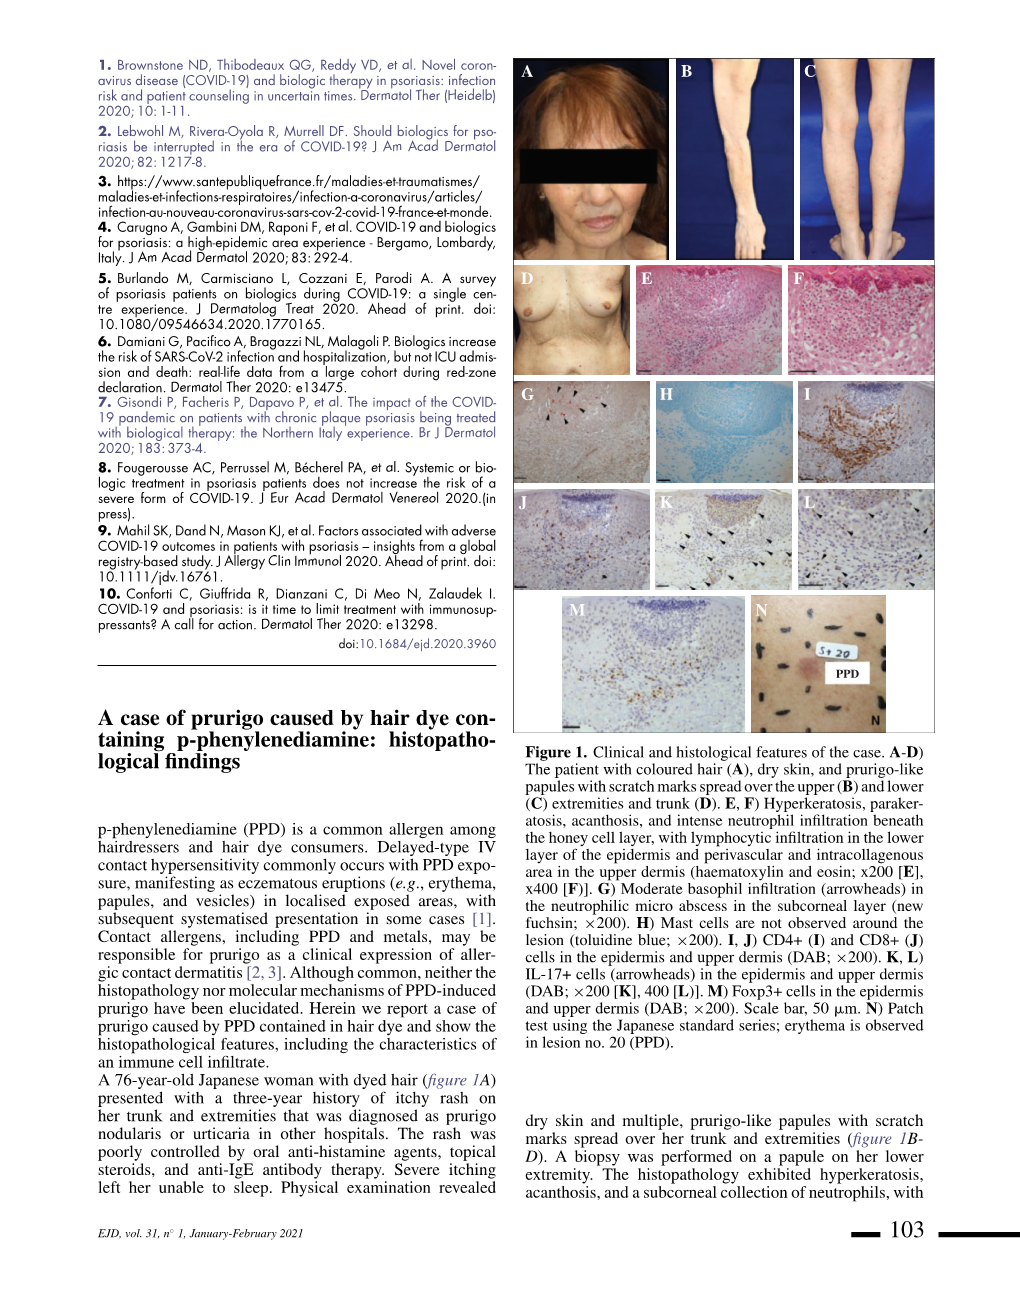 A Case of Prurigo Caused by Hair Dye Con- Taining P-Phenylenediamine: Histopatho- Figure 1